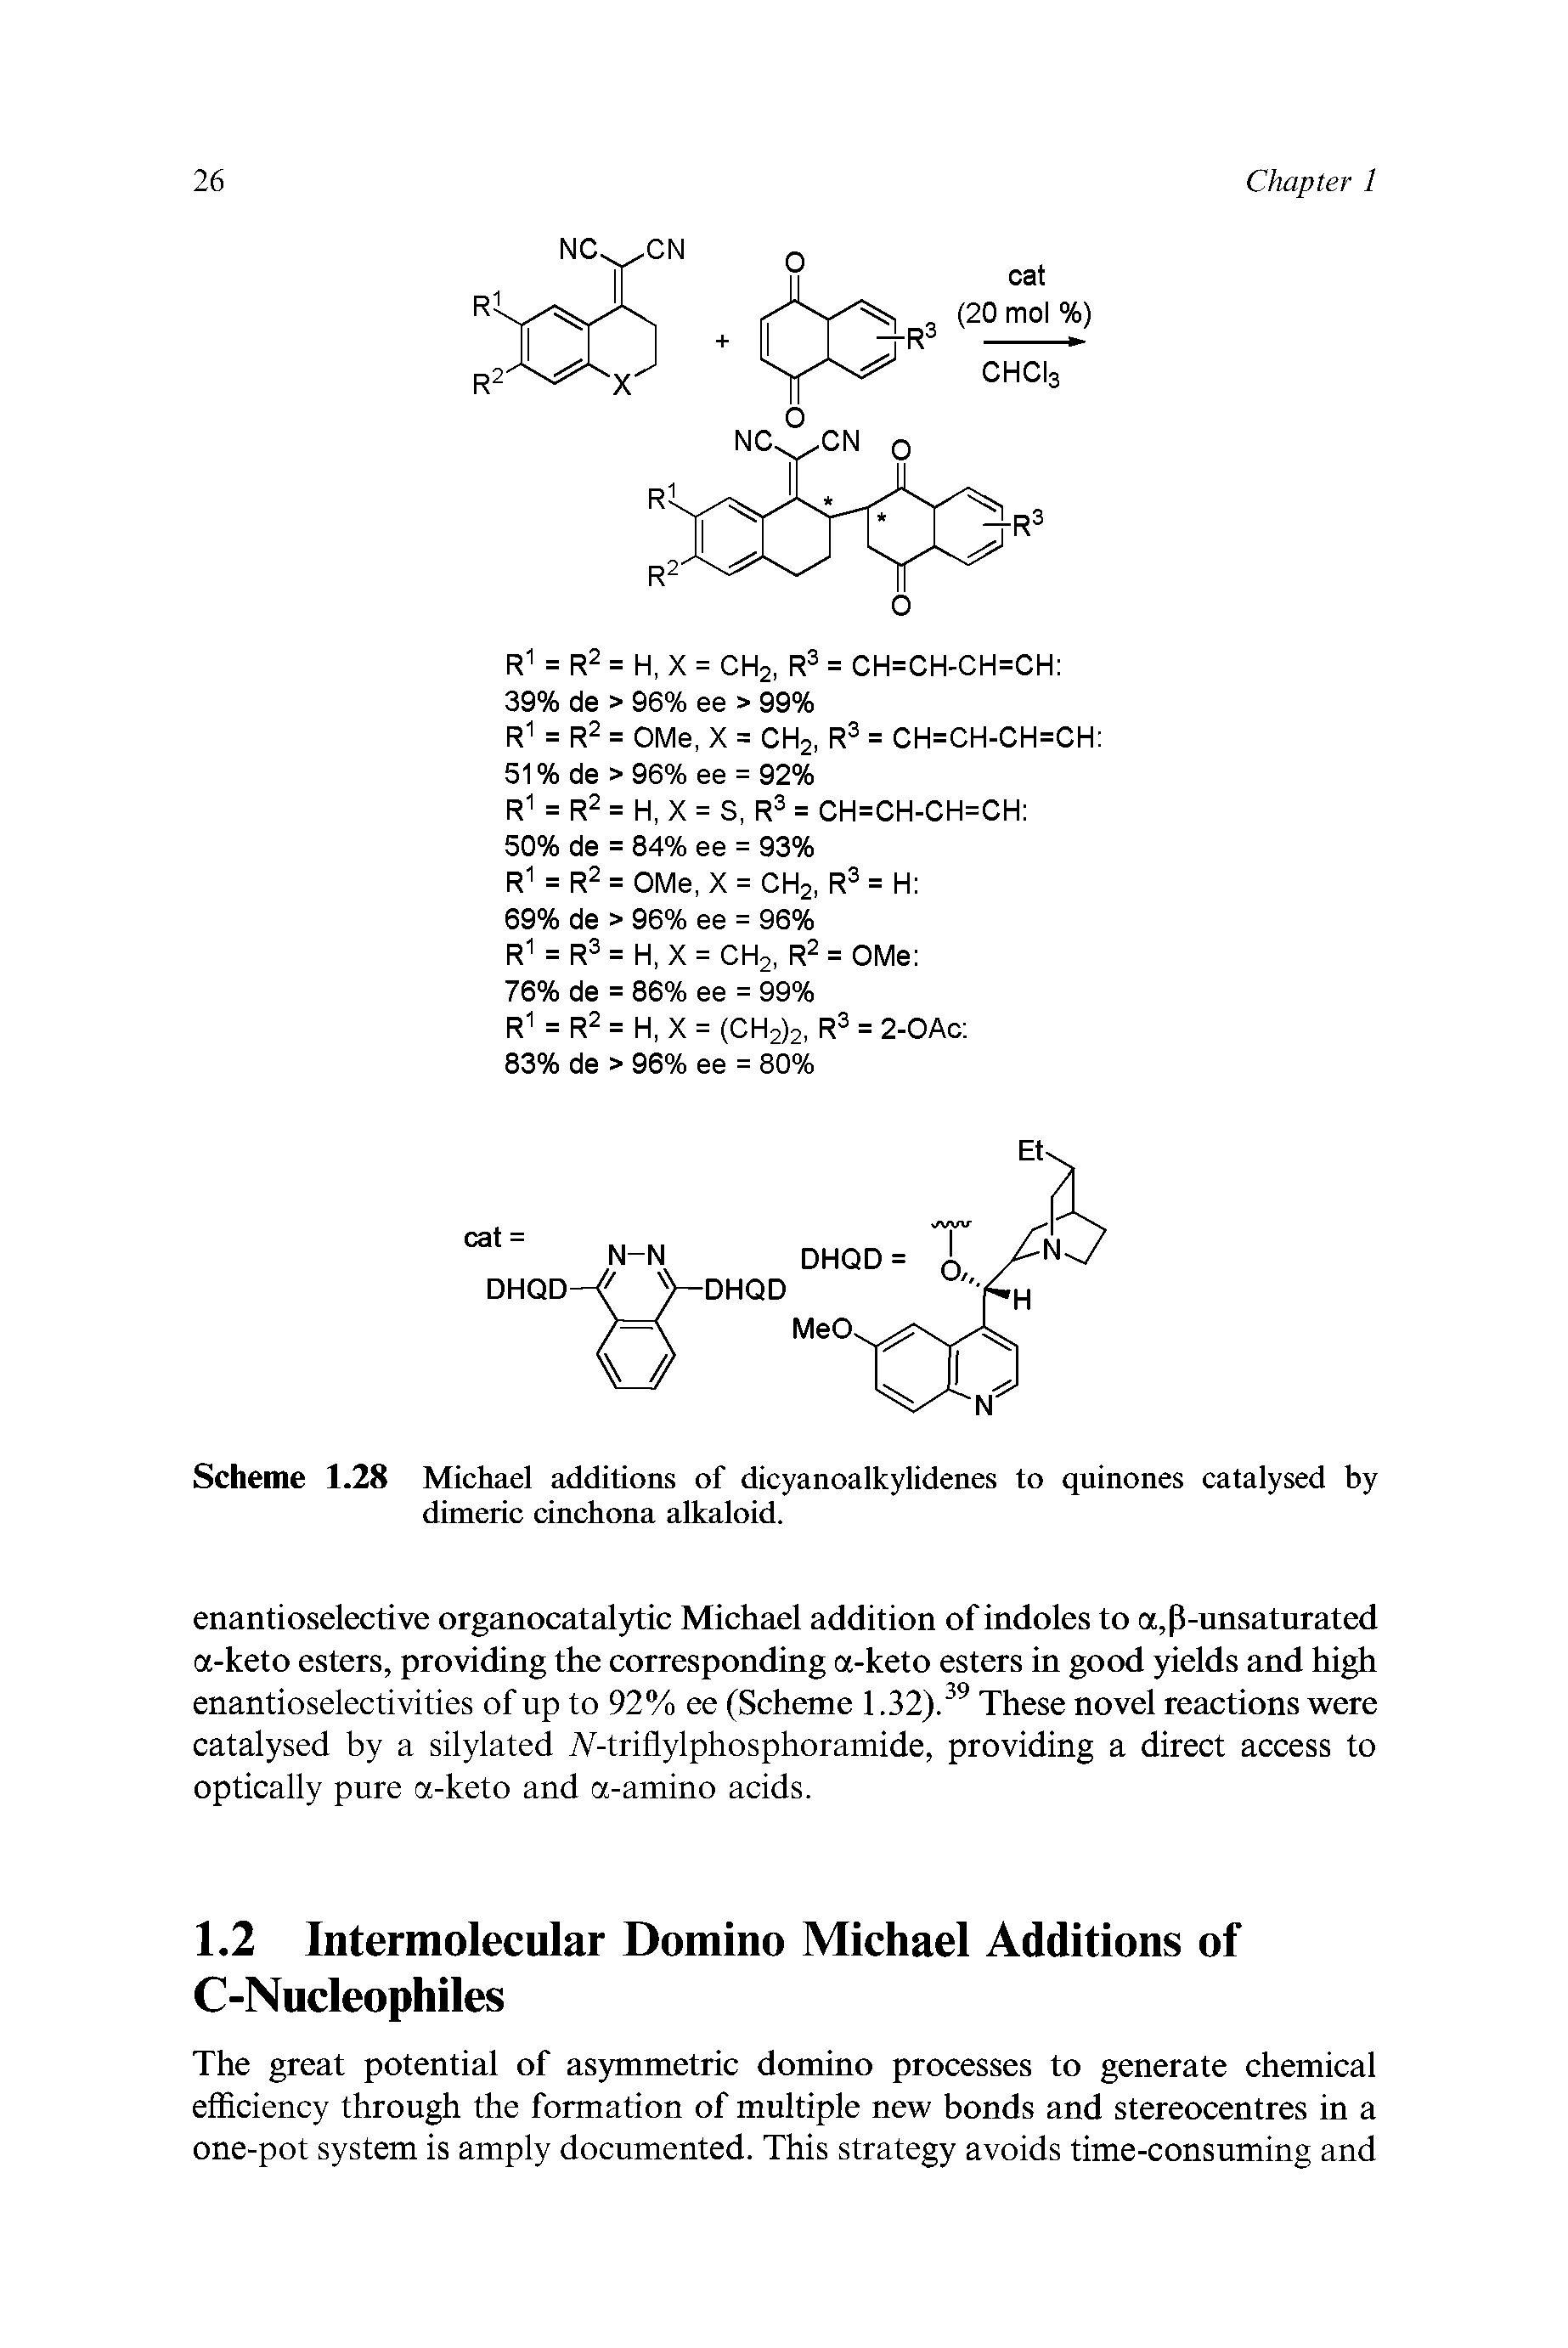 Scheme 1.28 Michael additions of dicyanoalkylidenes to quinones catalysed by dimeric cinchona alkaloid.